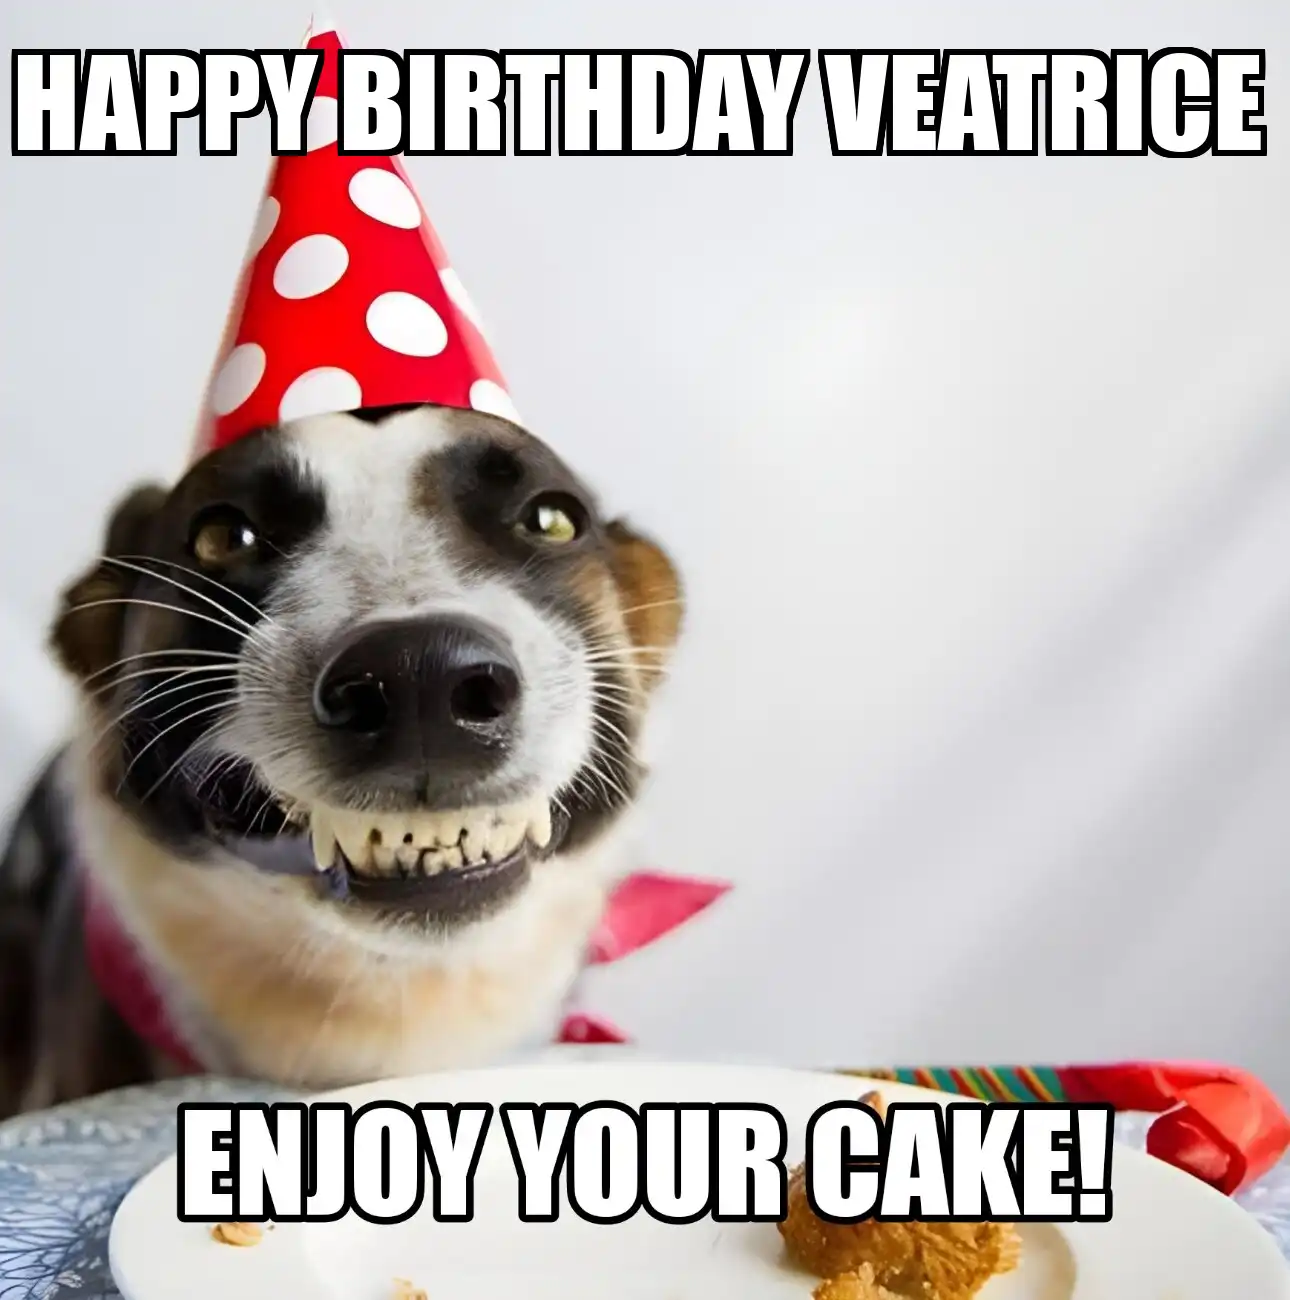 Happy Birthday Veatrice Enjoy Your Cake Dog Meme